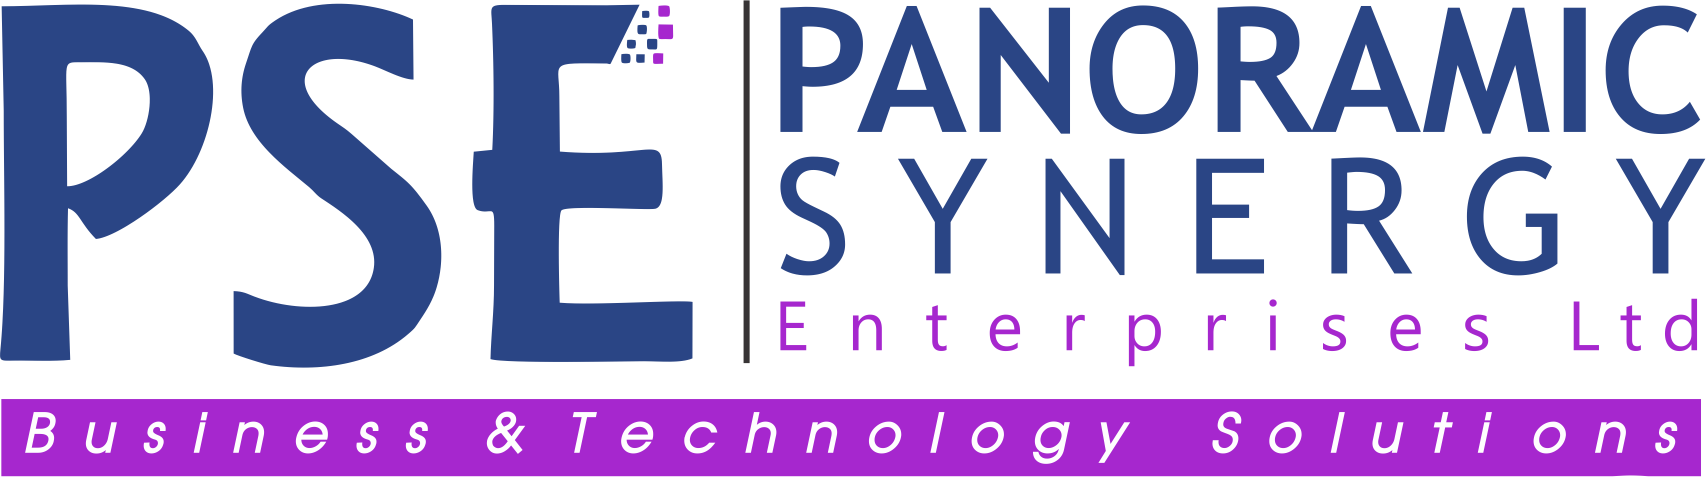 Panoramic Synergy Enterprise